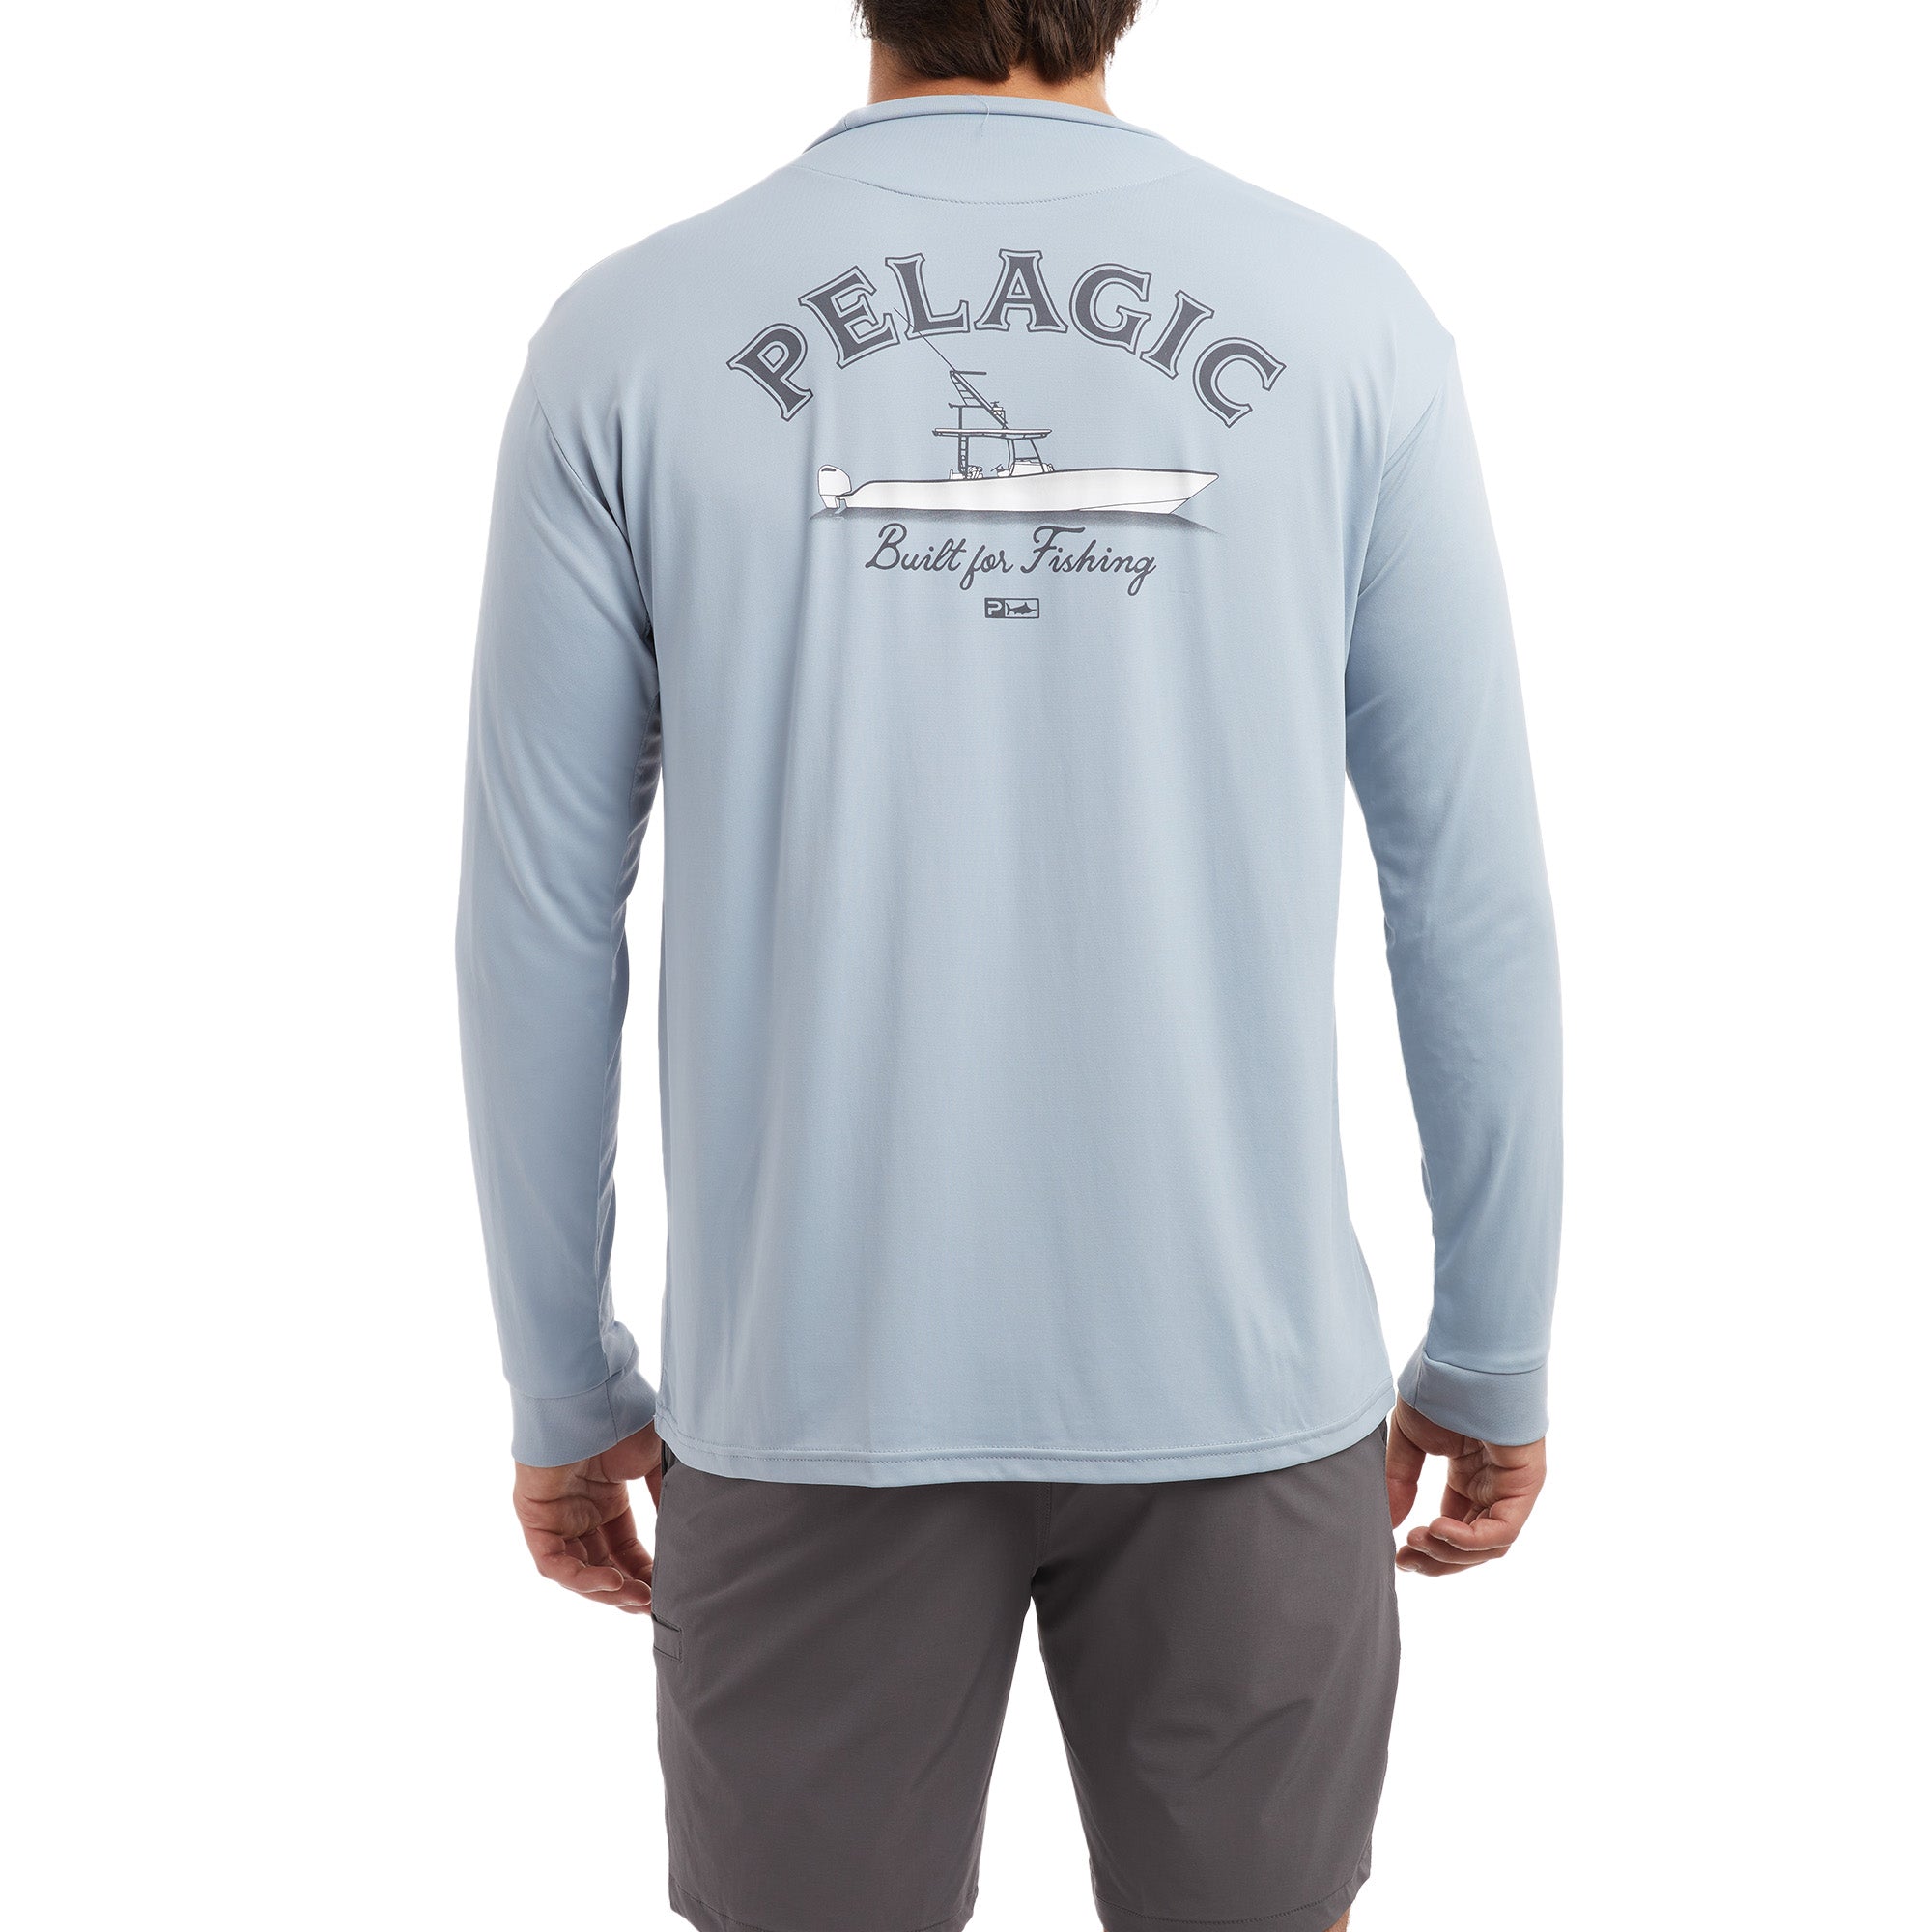 Pelagic Men's Long Sleeve Black Fishing Shirt Size 2XL Sun Shirt 100% Nylon